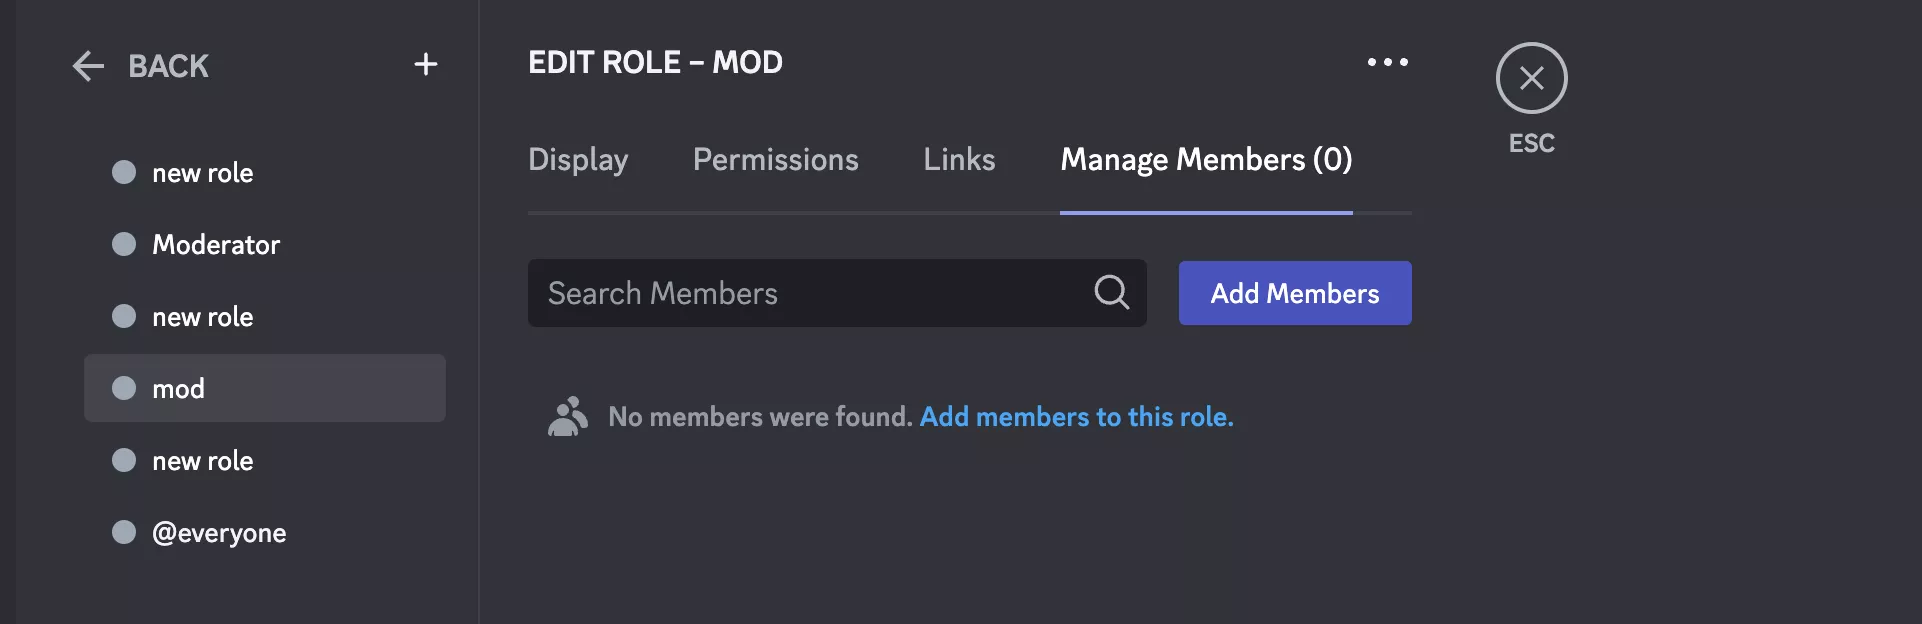 Add members settings in the Discord app